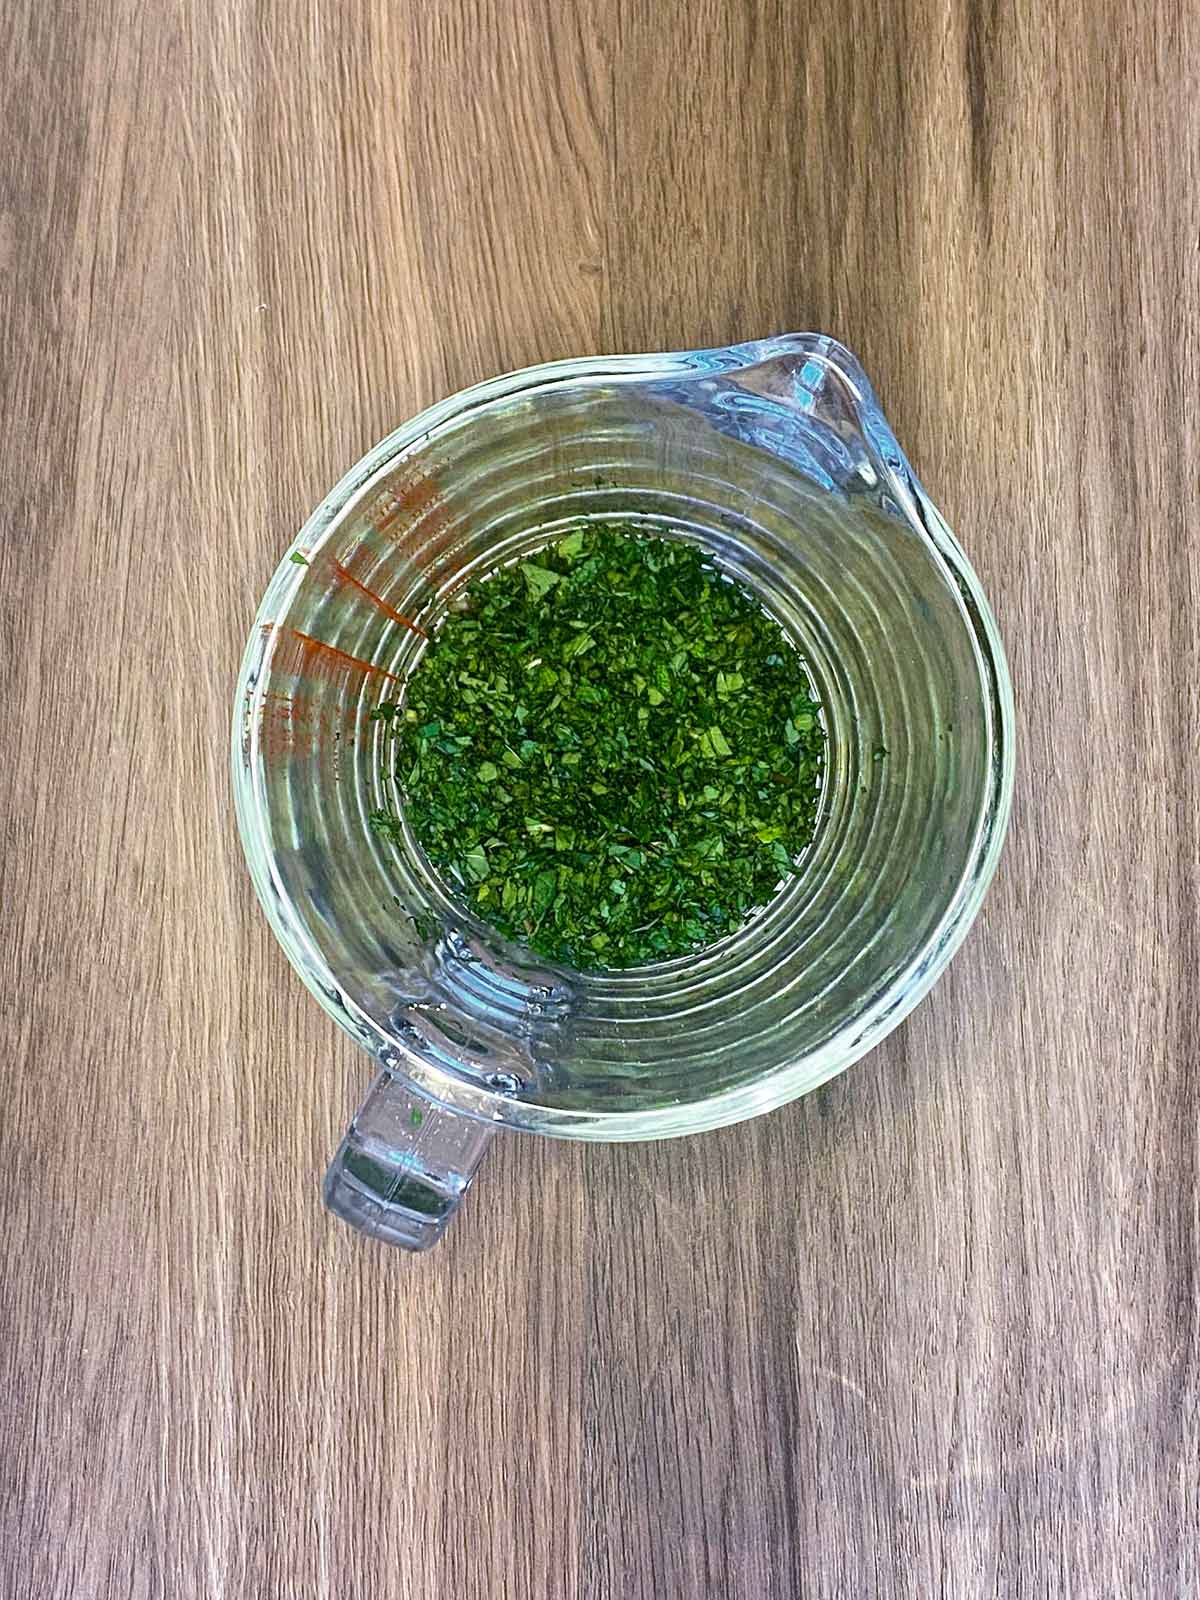 Chopped fresh mint in a glass jug.